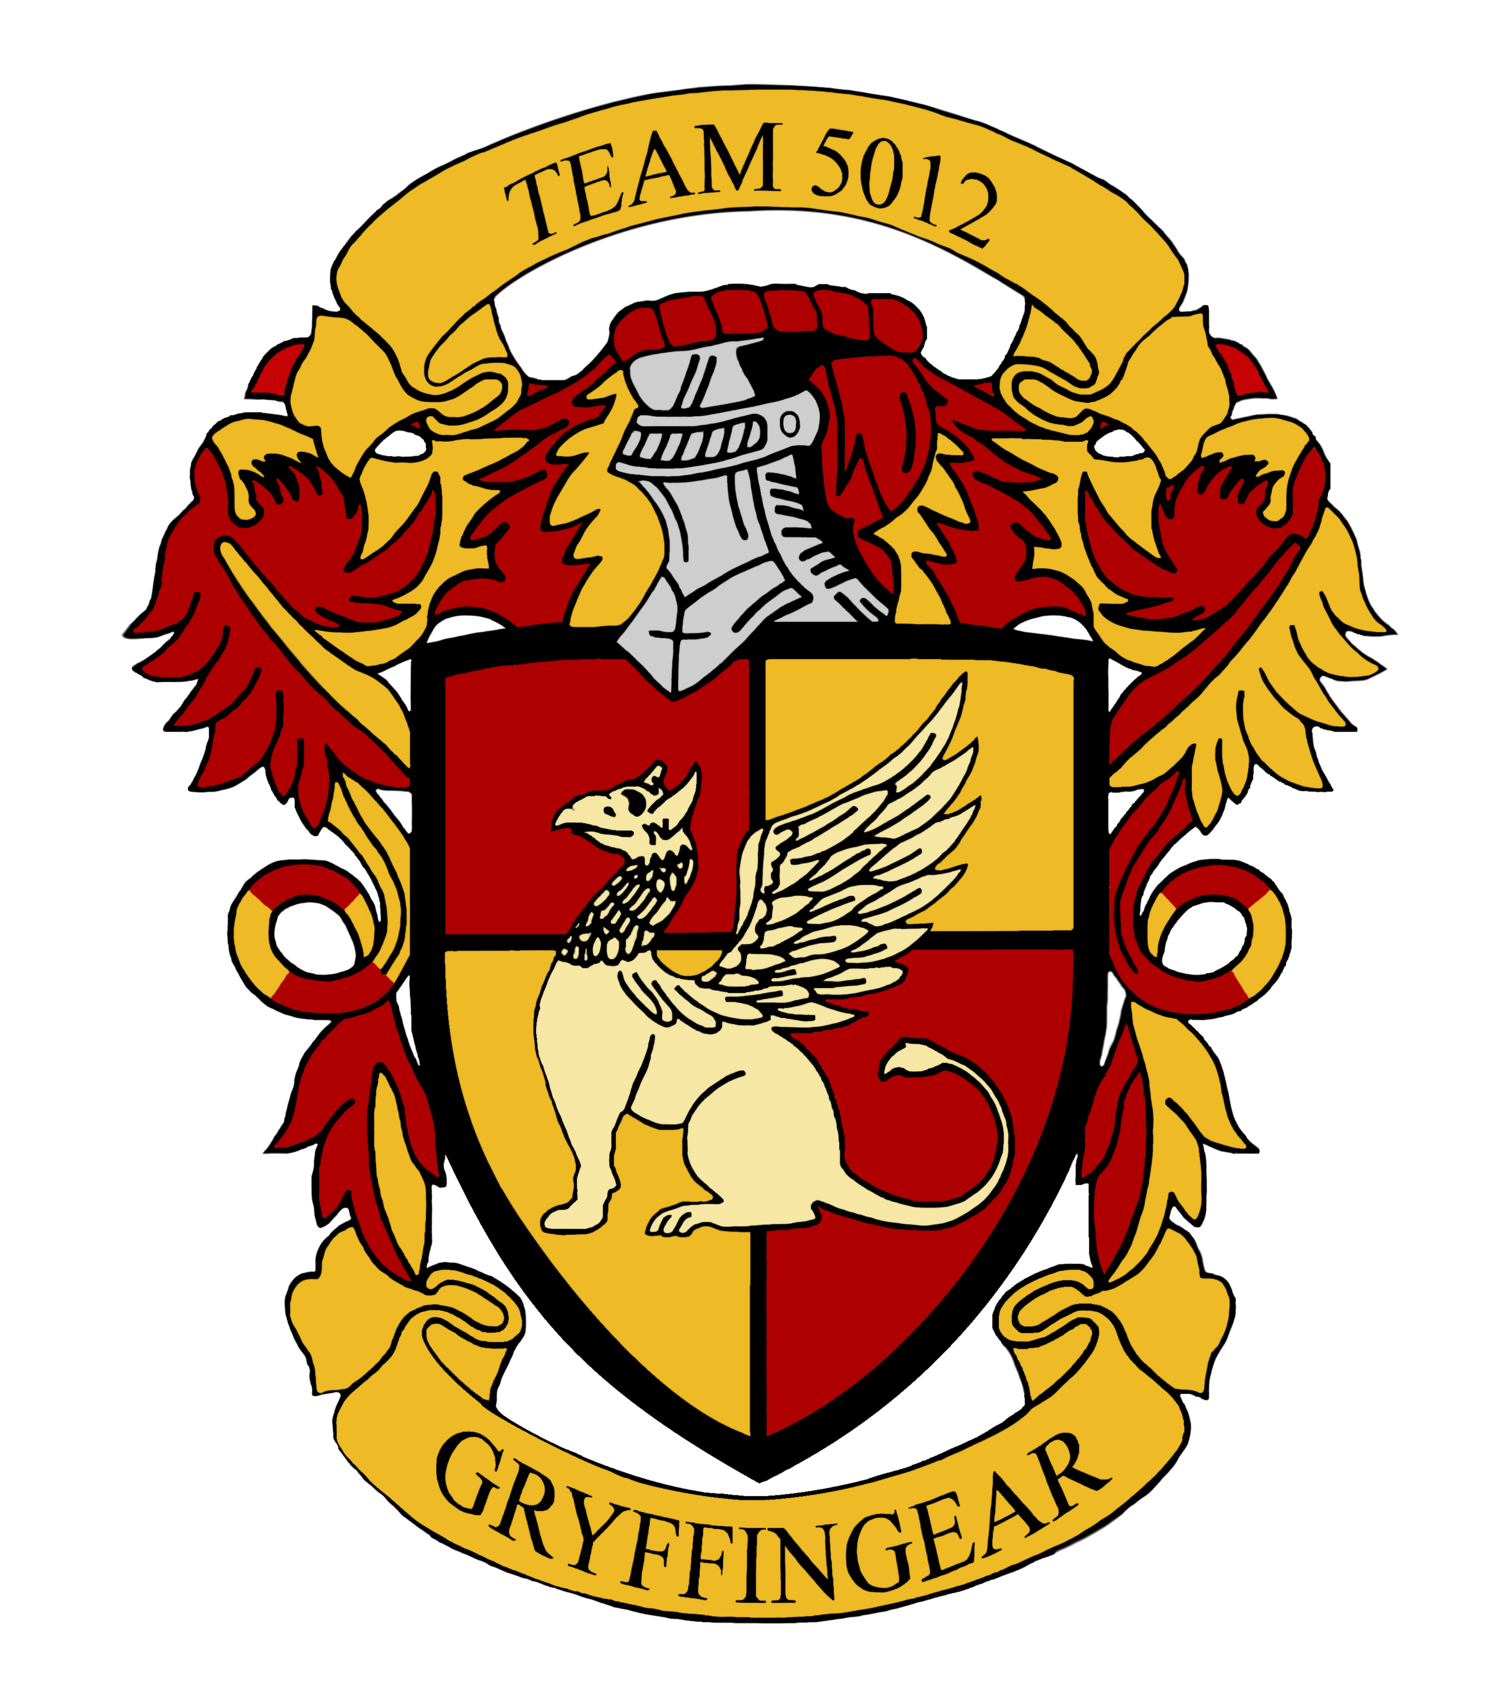 Team 5012 Gryffingear